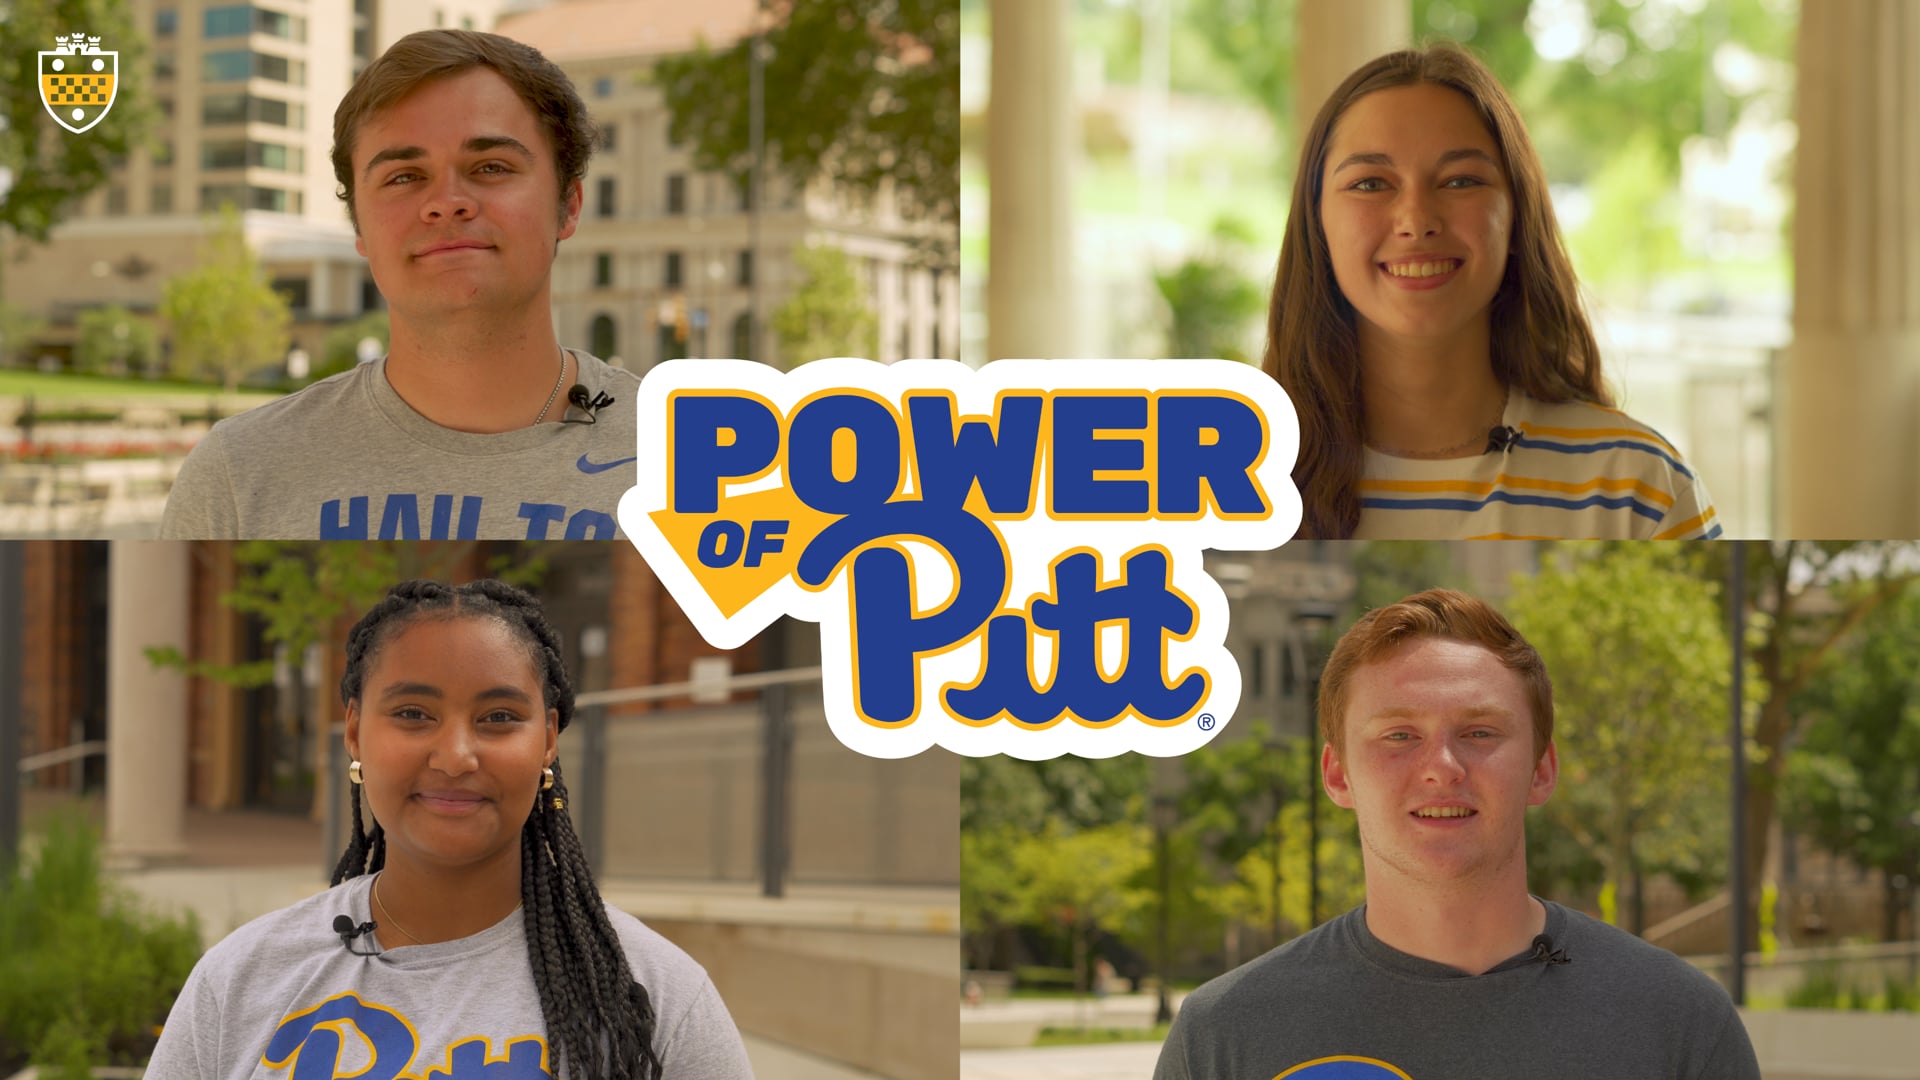 The Power of Pitt